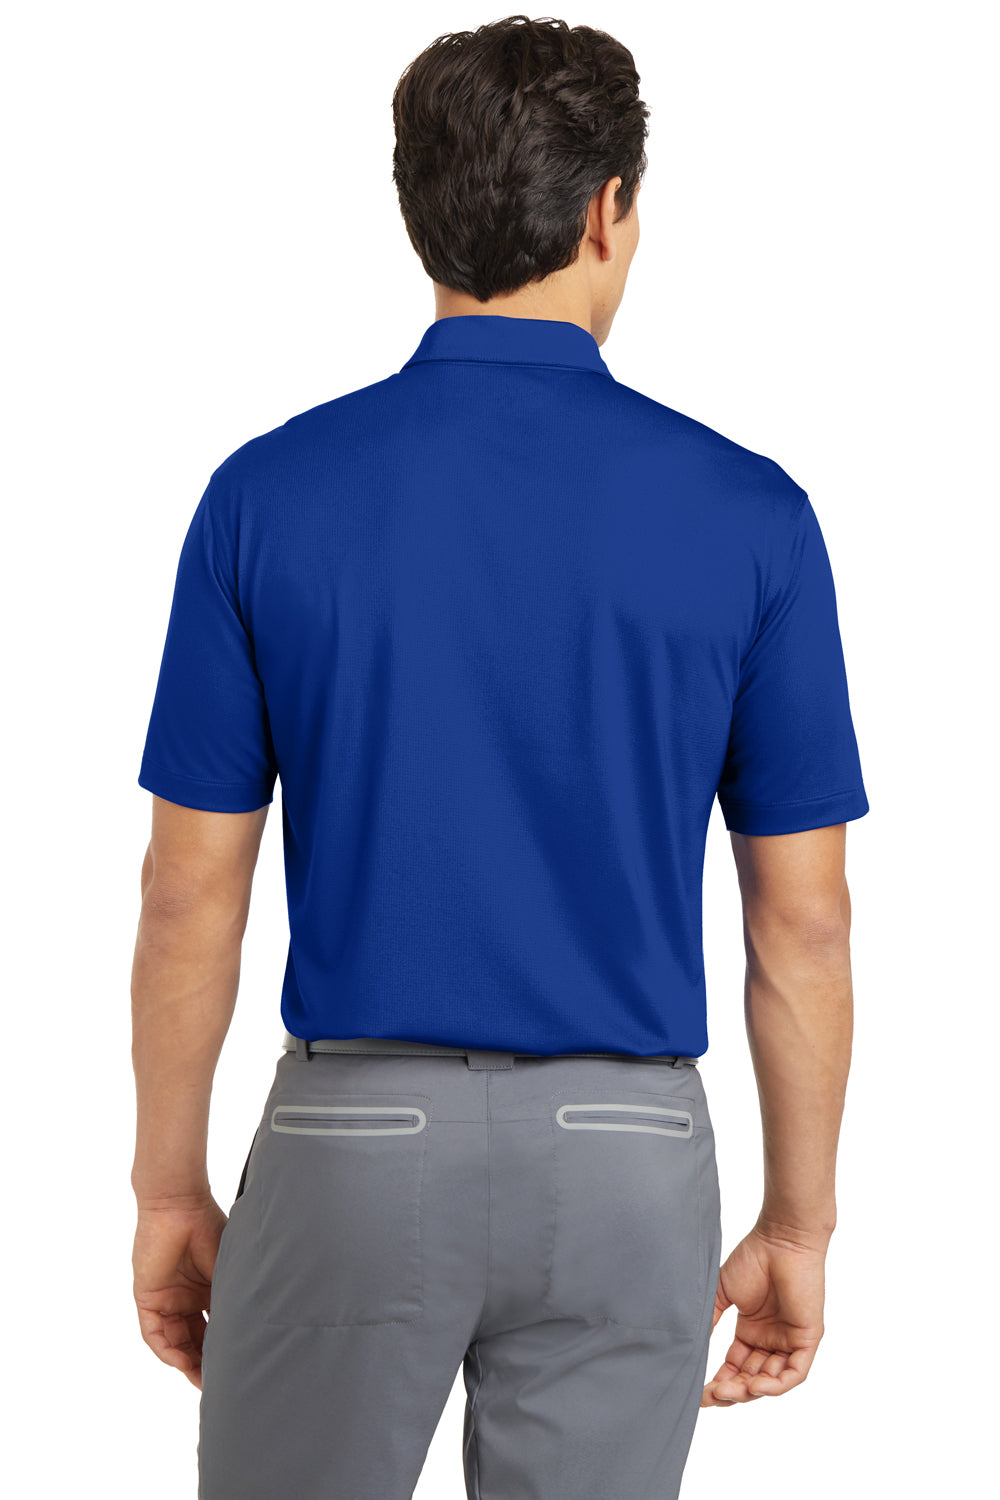 Nike 637167 Mens Dri-Fit Moisture Wicking Short Sleeve Polo Shirt Royal Blue Model Back